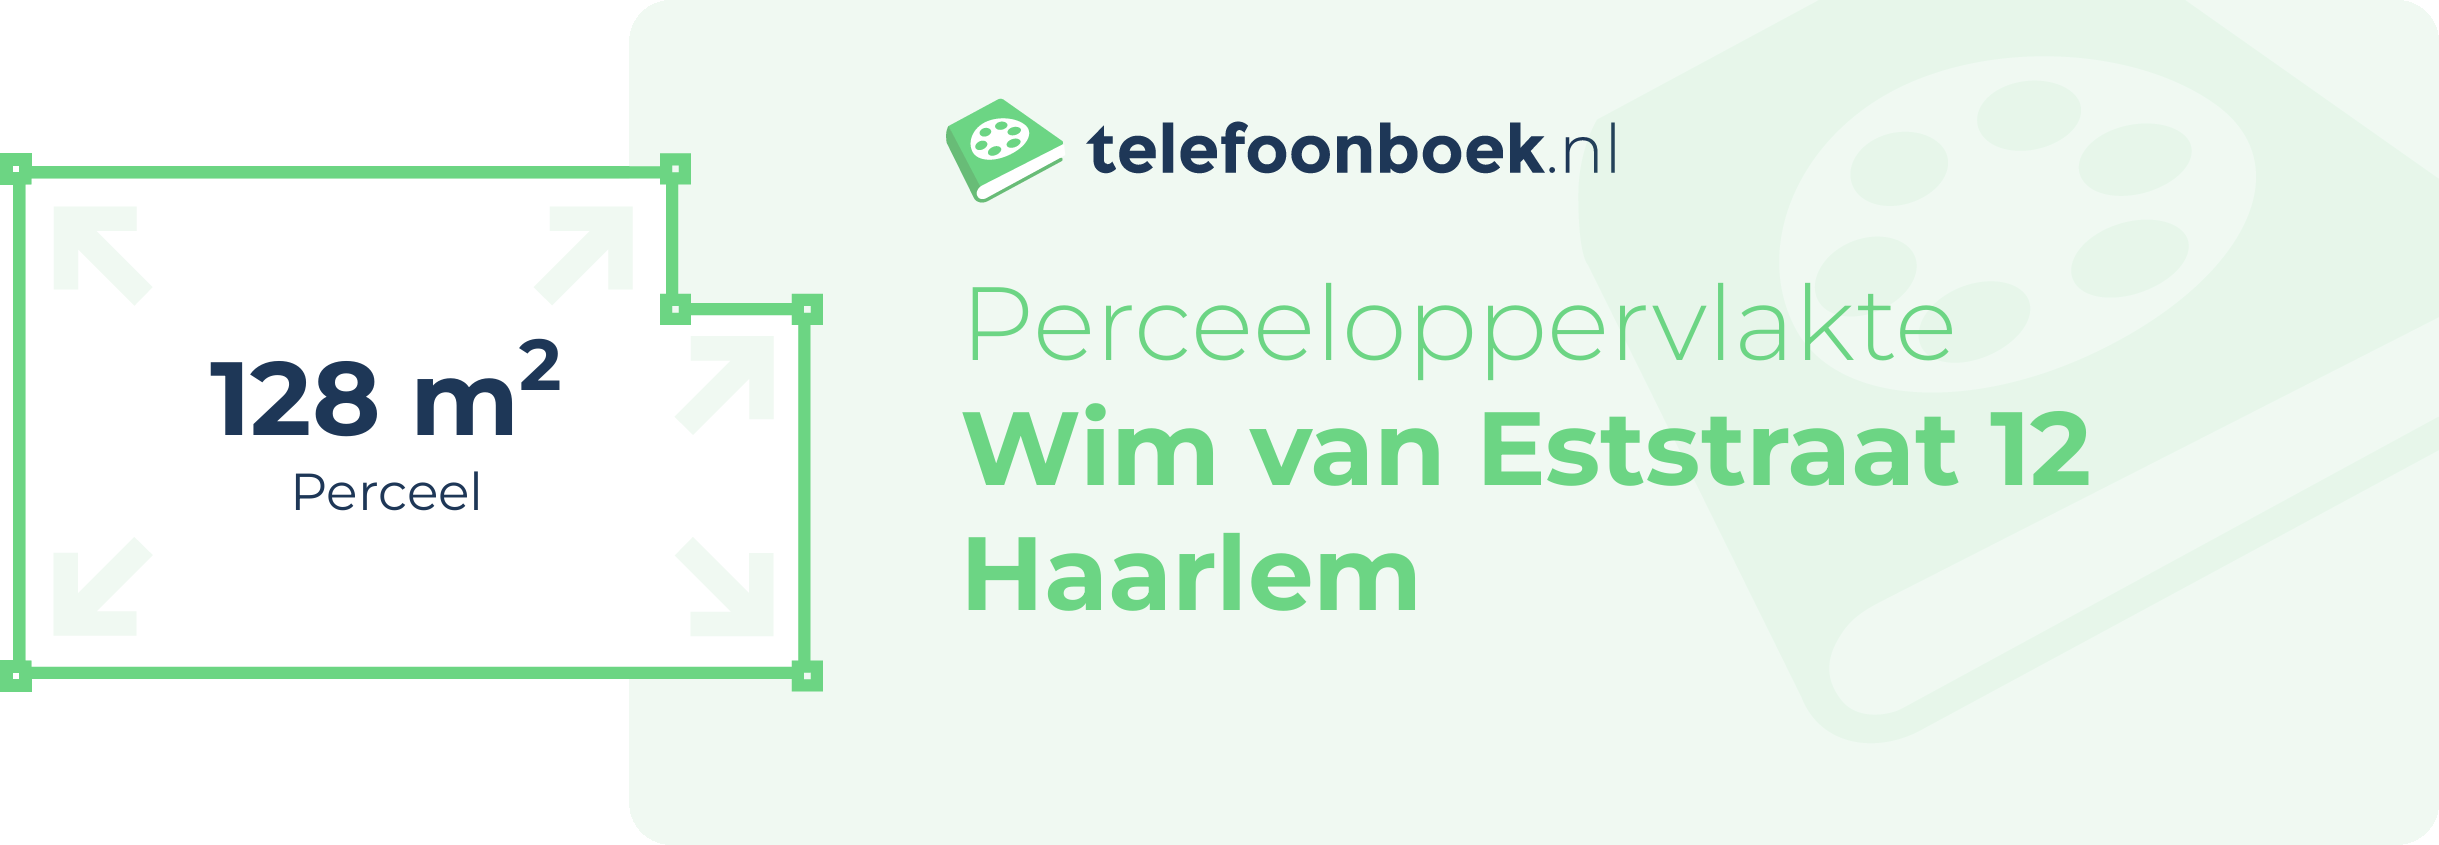 Perceeloppervlakte Wim Van Eststraat 12 Haarlem